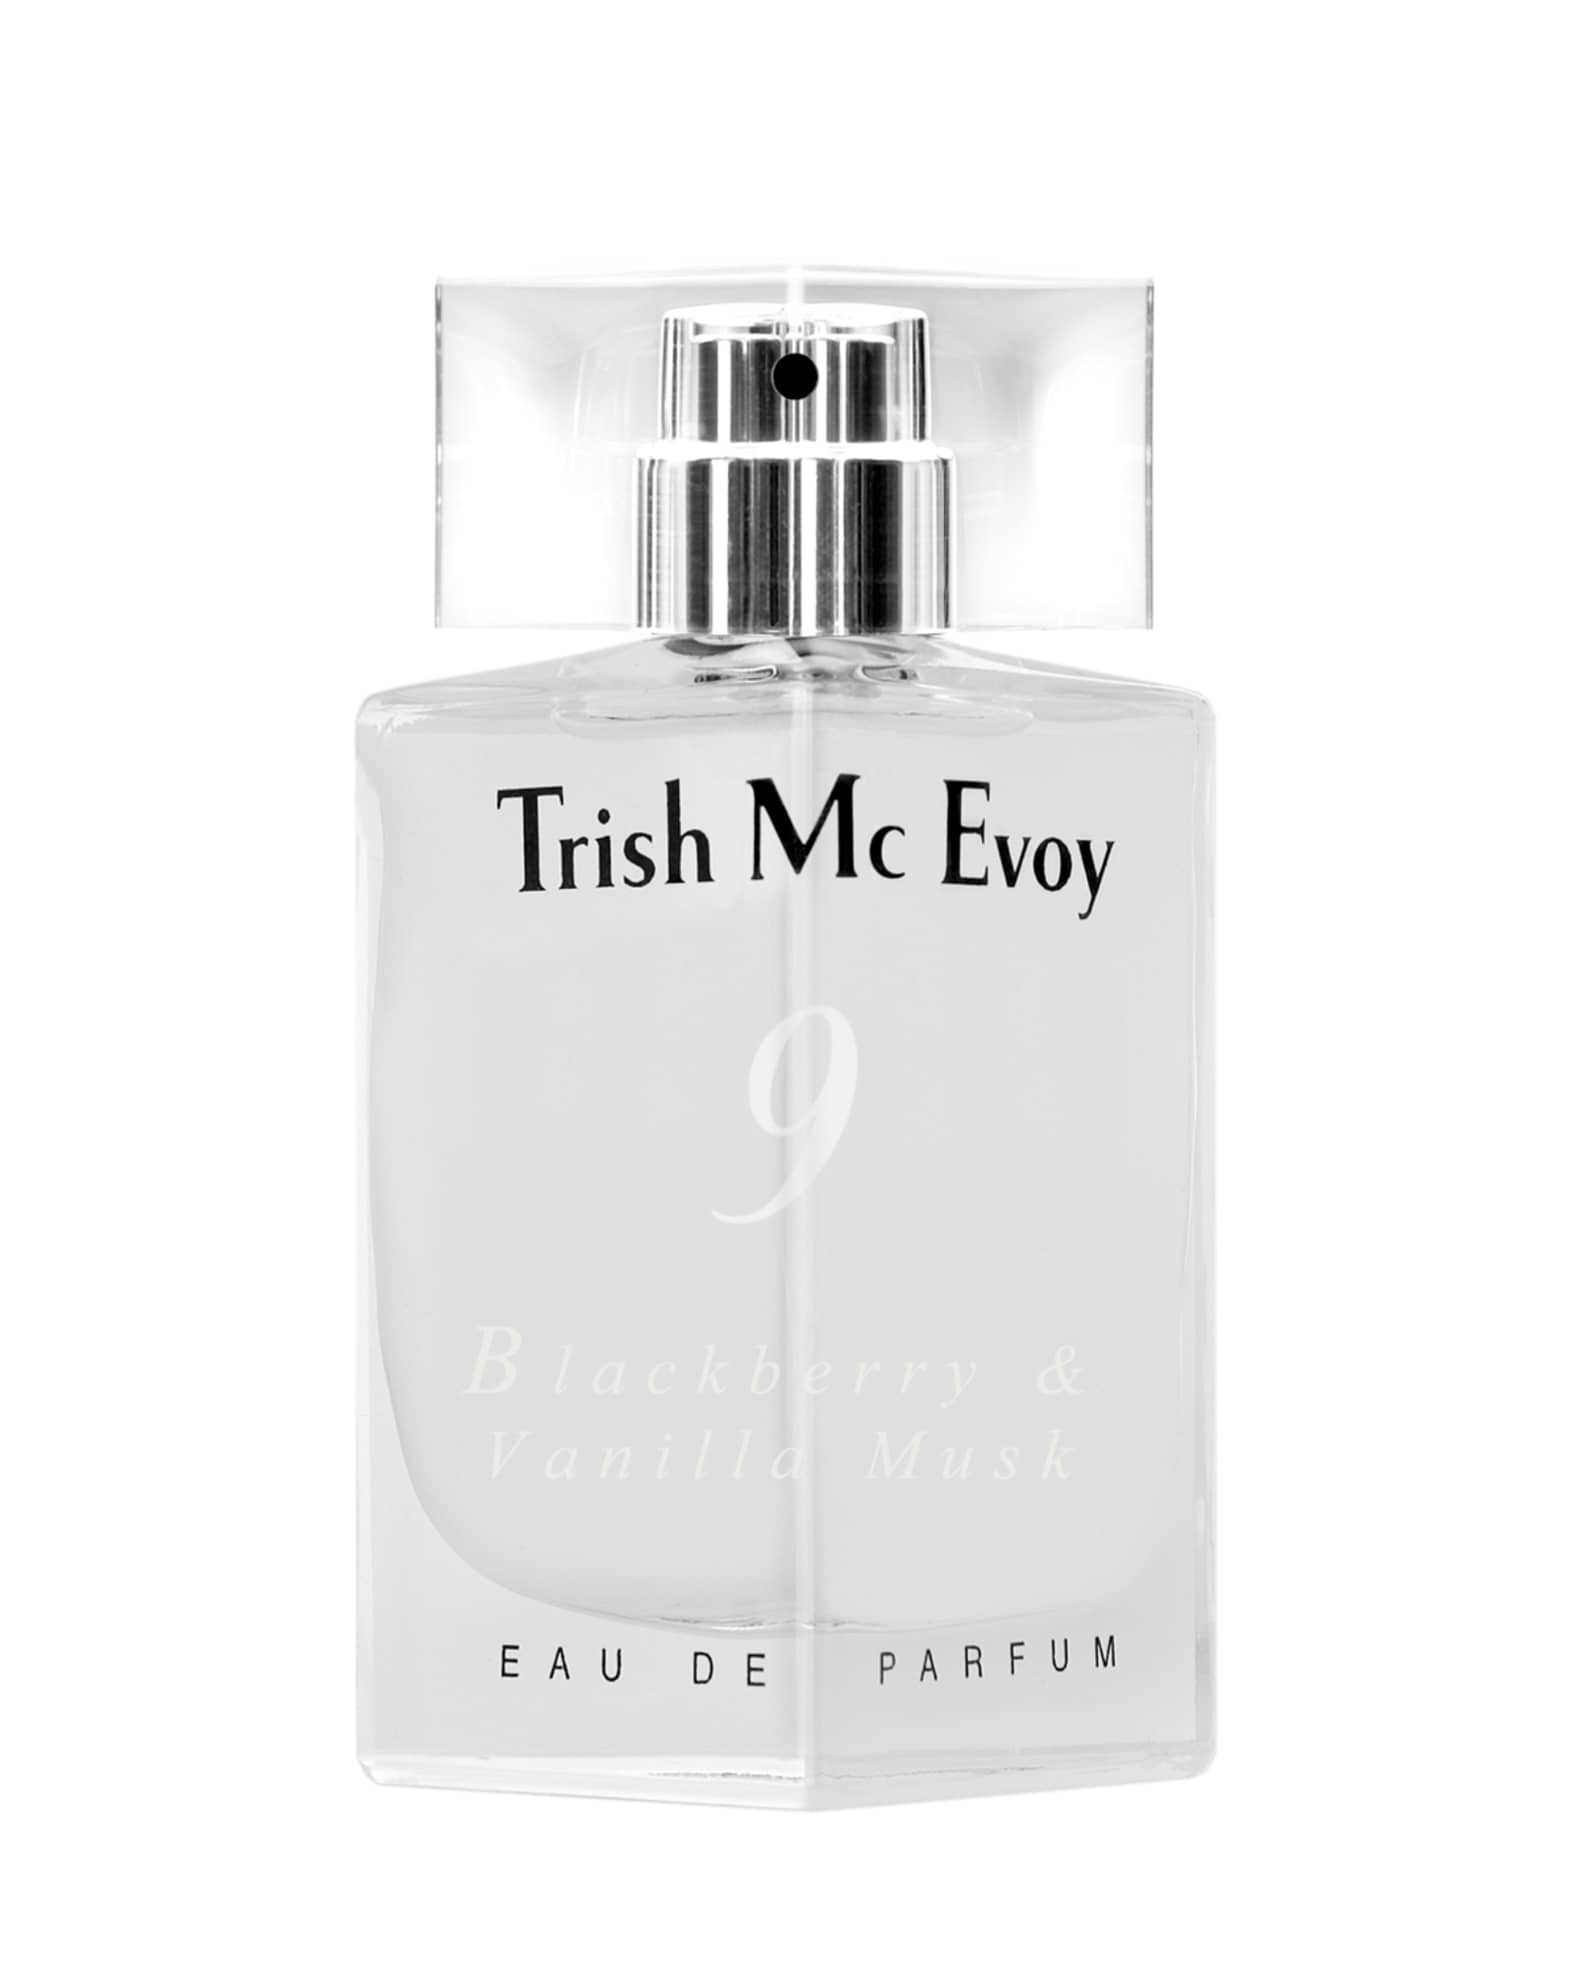 Trish McEvoy No. 9 Blackberry & Vanilla Musk Eau de Parfum Spray - Size 1.7 oz.